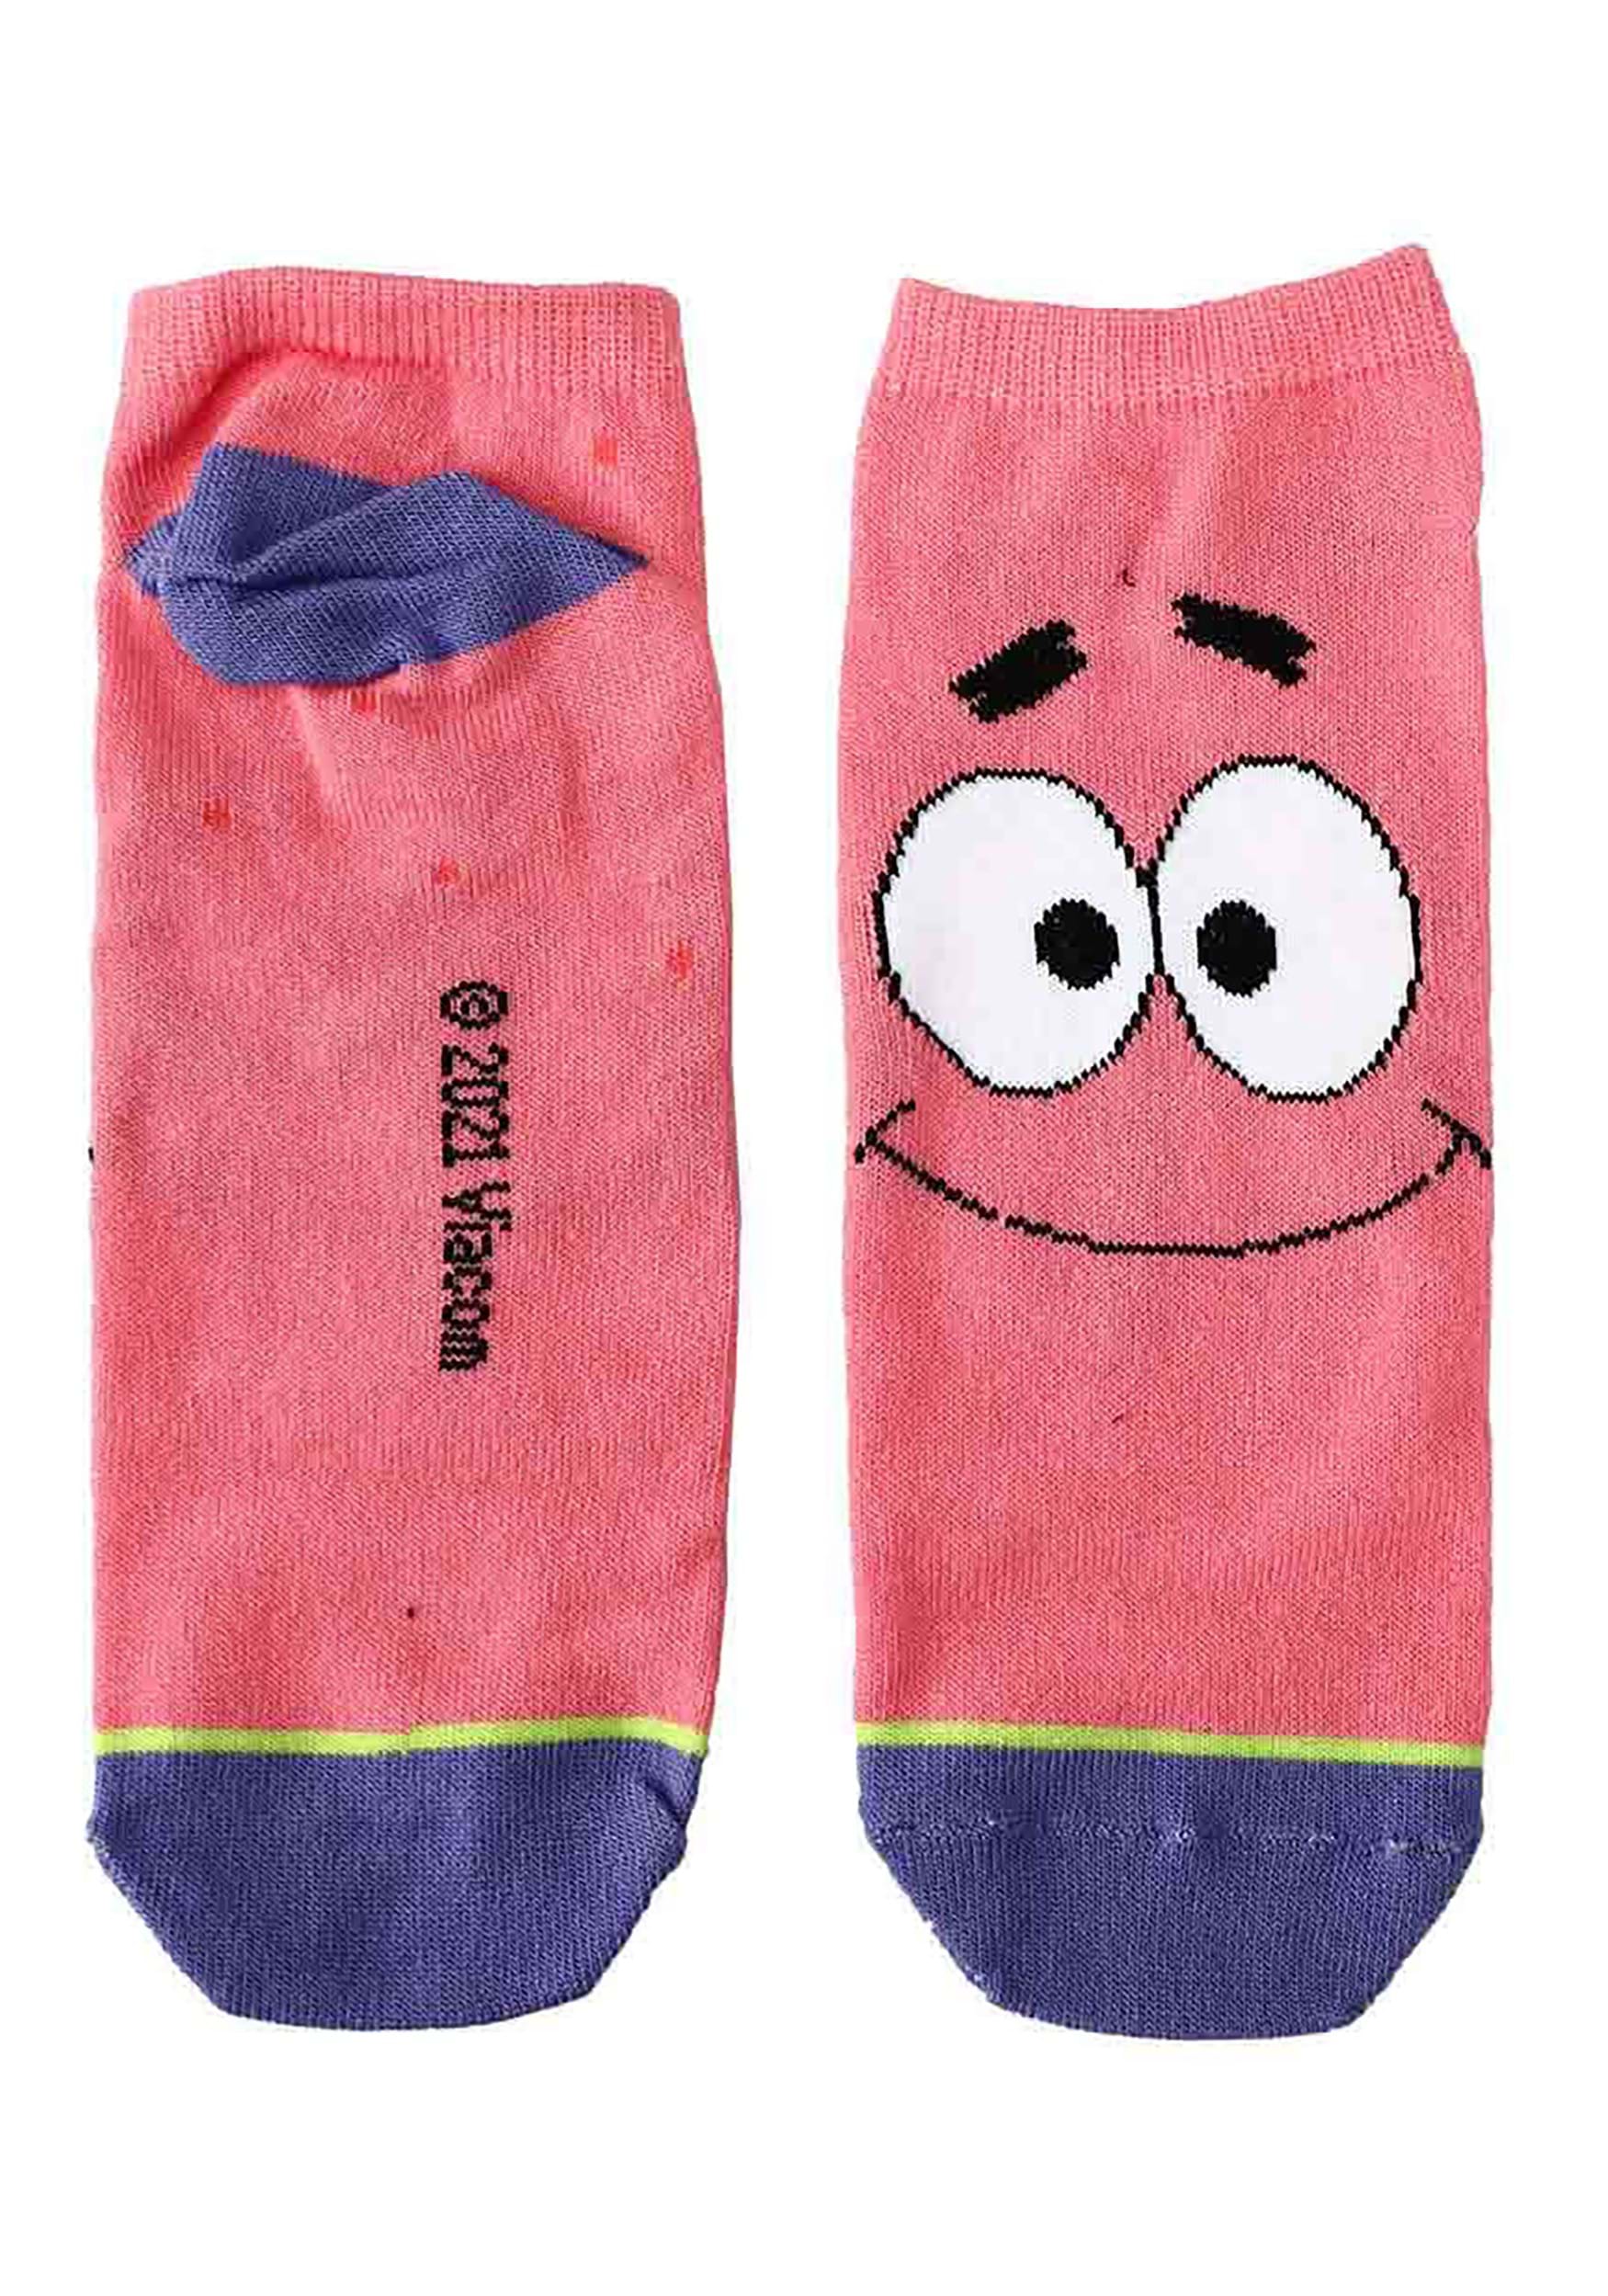 Spongebob Squarepants New Stockings Socks Cartoon Anime Figure Patrick Star  Squidward Tentacles Boys And Girls Cotton Socks - Action Figures -  AliExpress